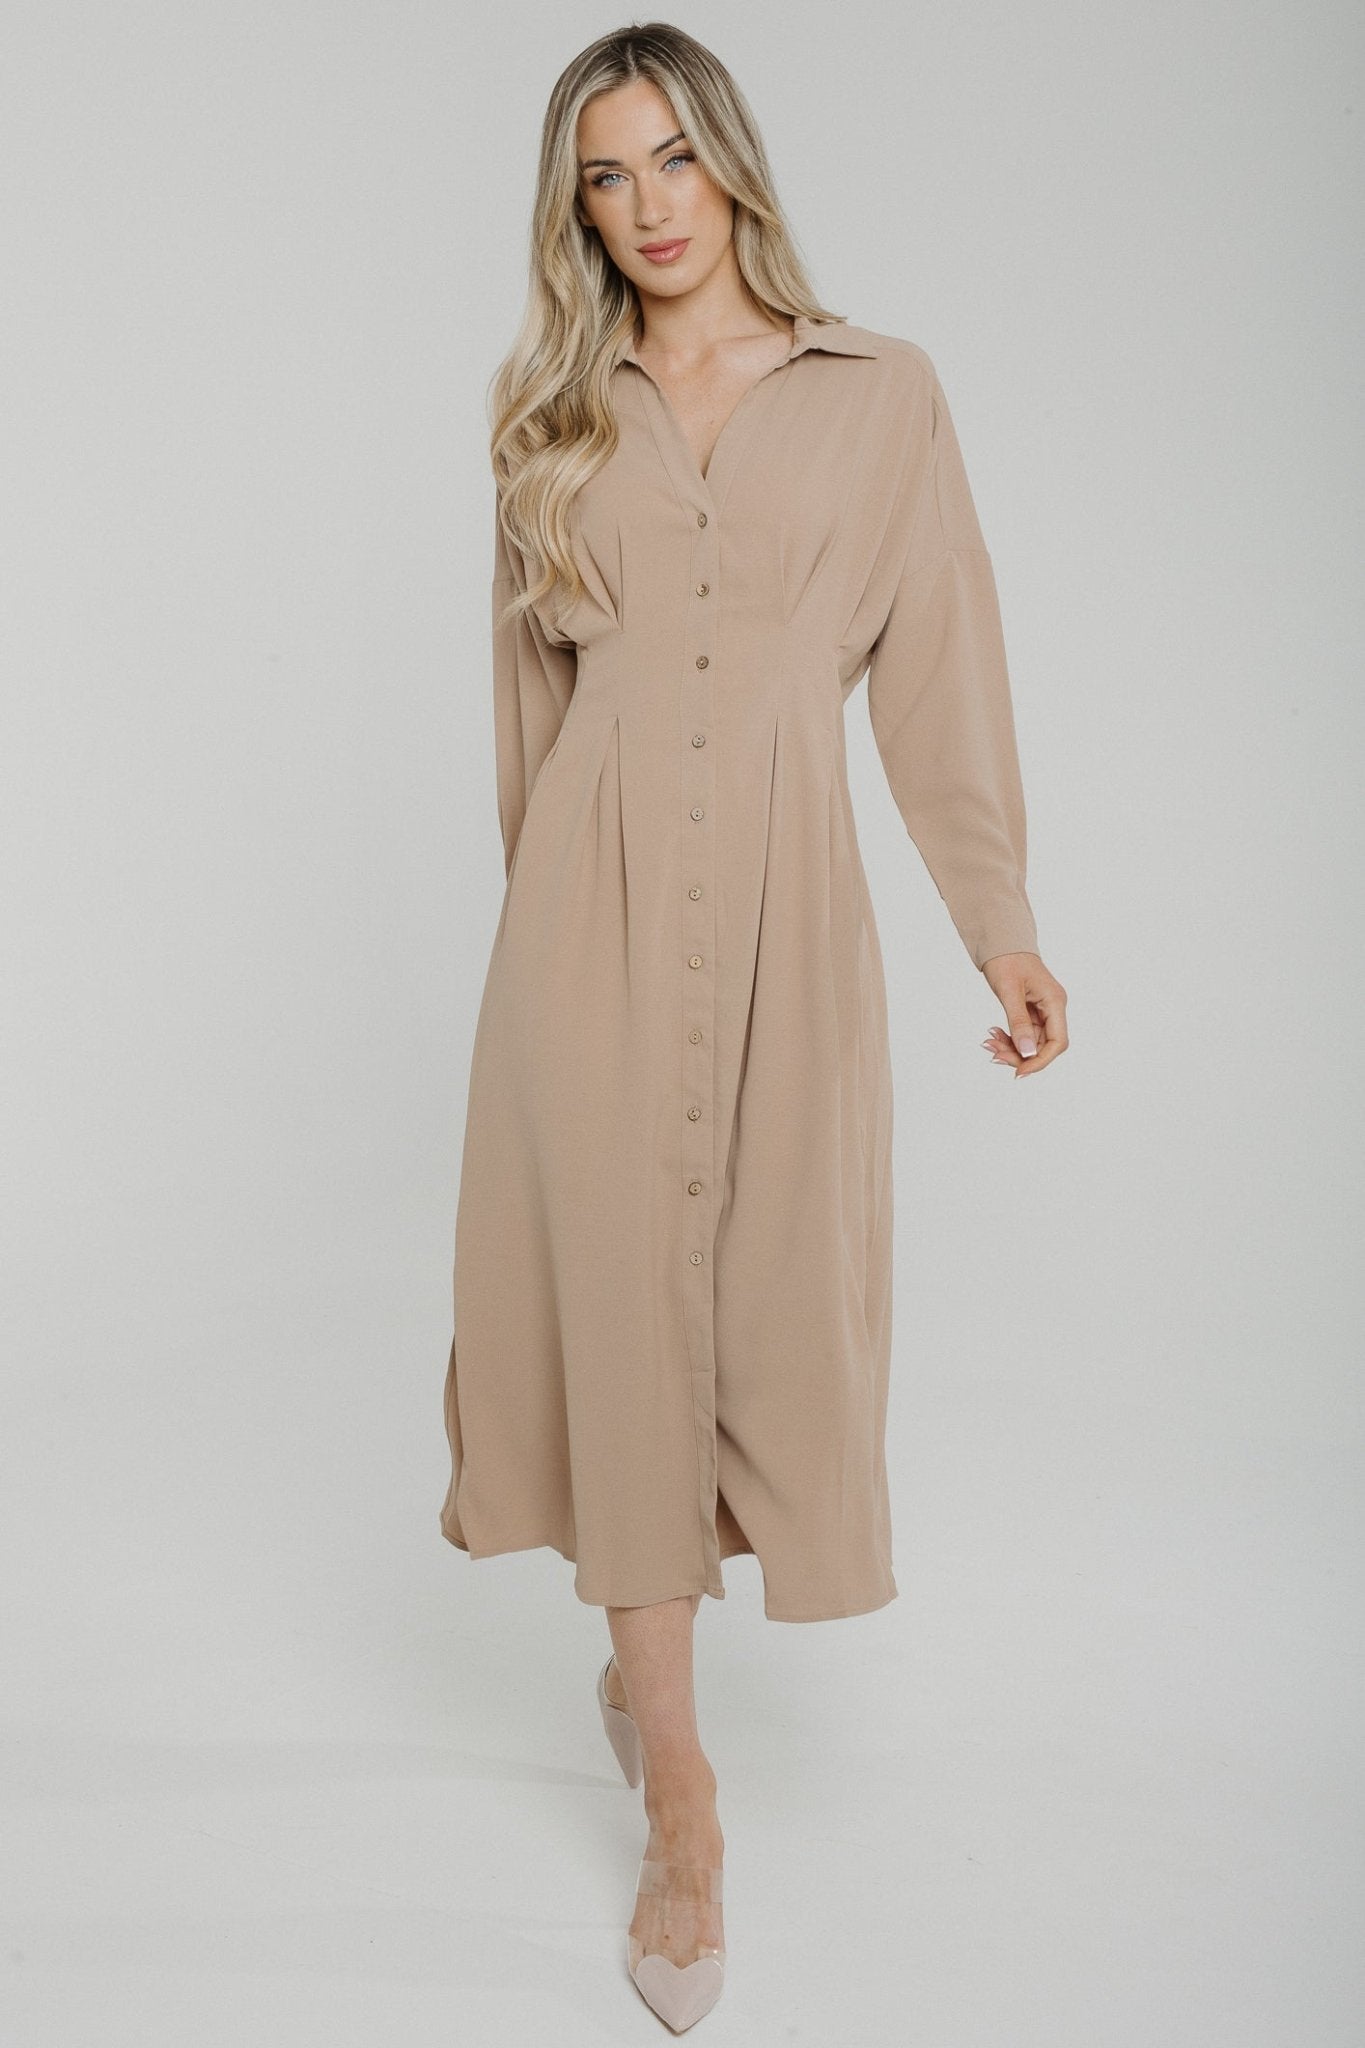 Ella Button Front Midi Dress In Beige - The Walk in Wardrobe